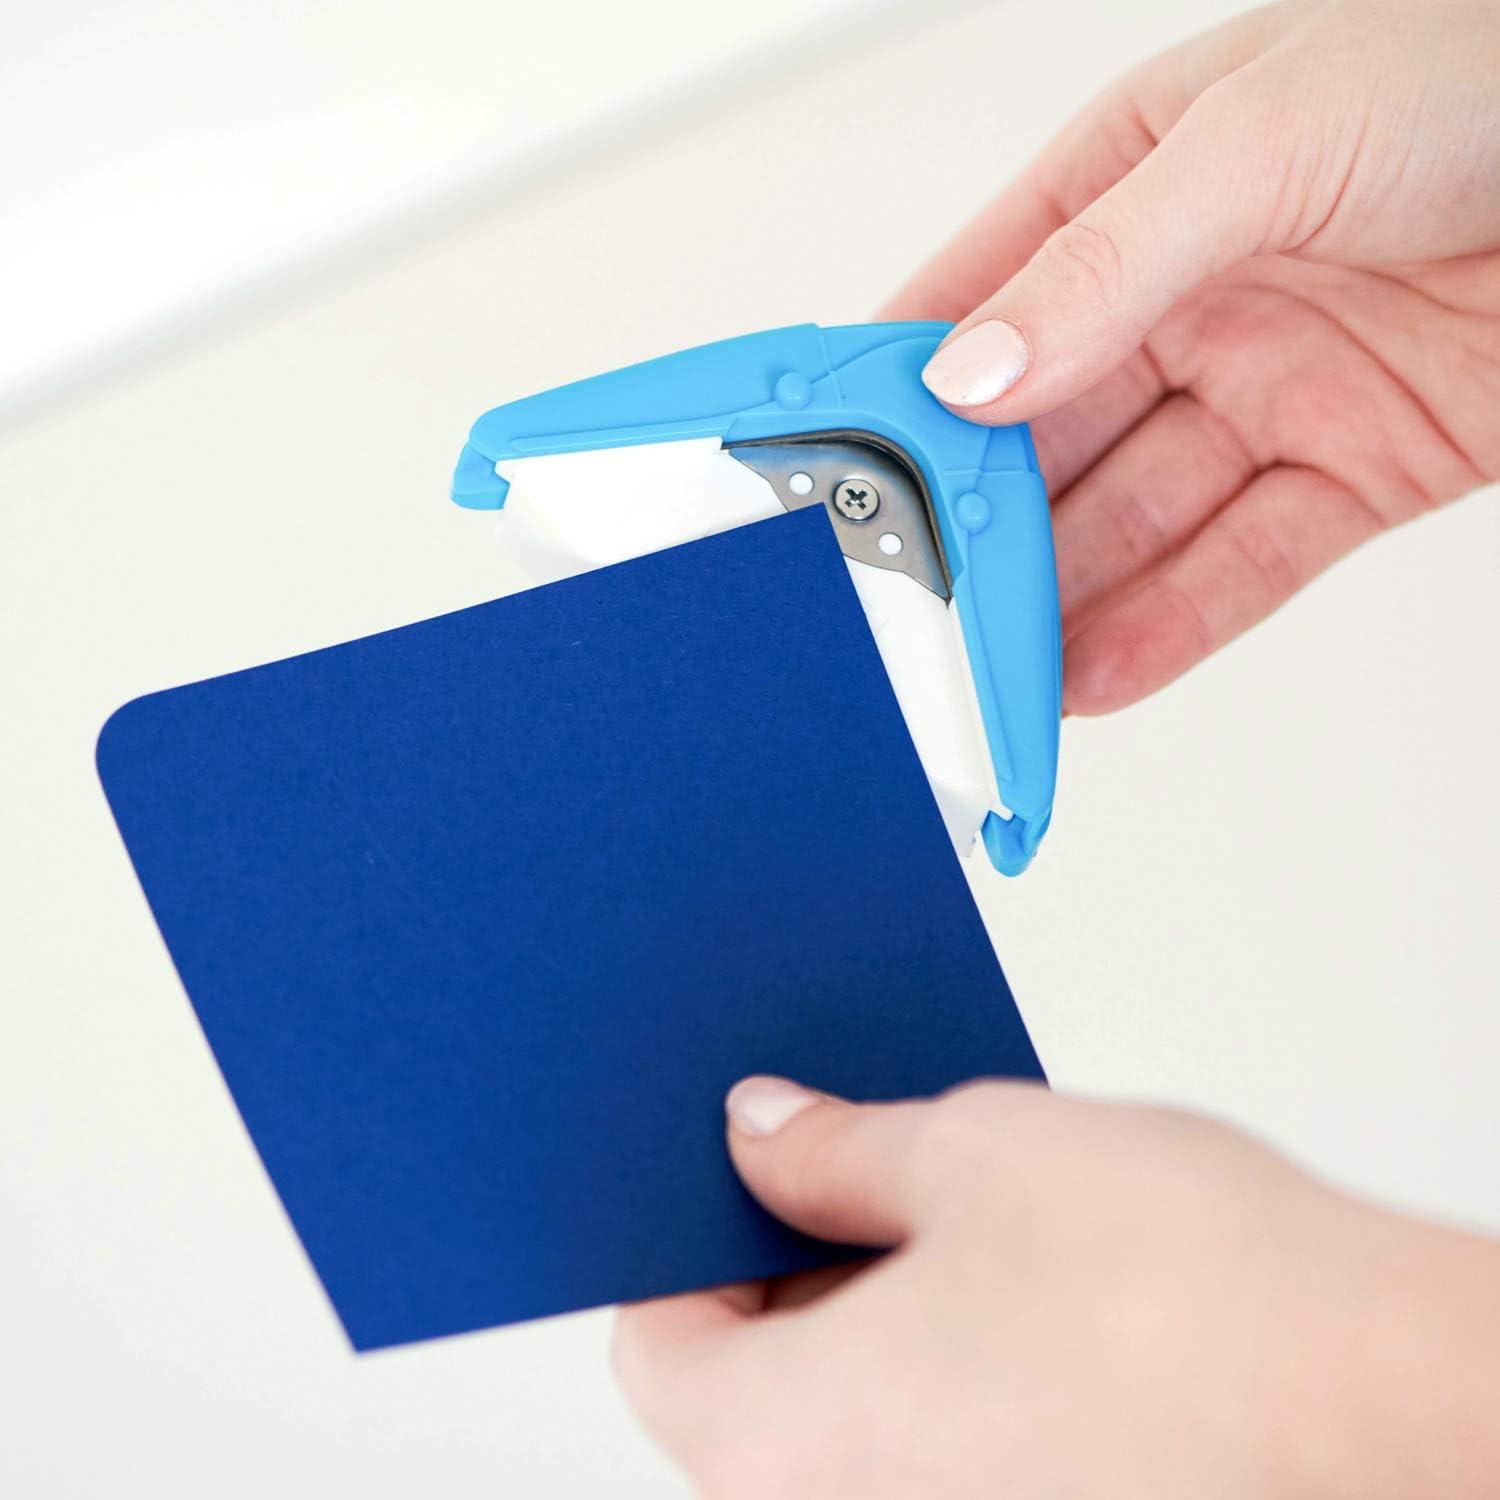 Paper Corner Cutter for Curve Scrapbooking Tool